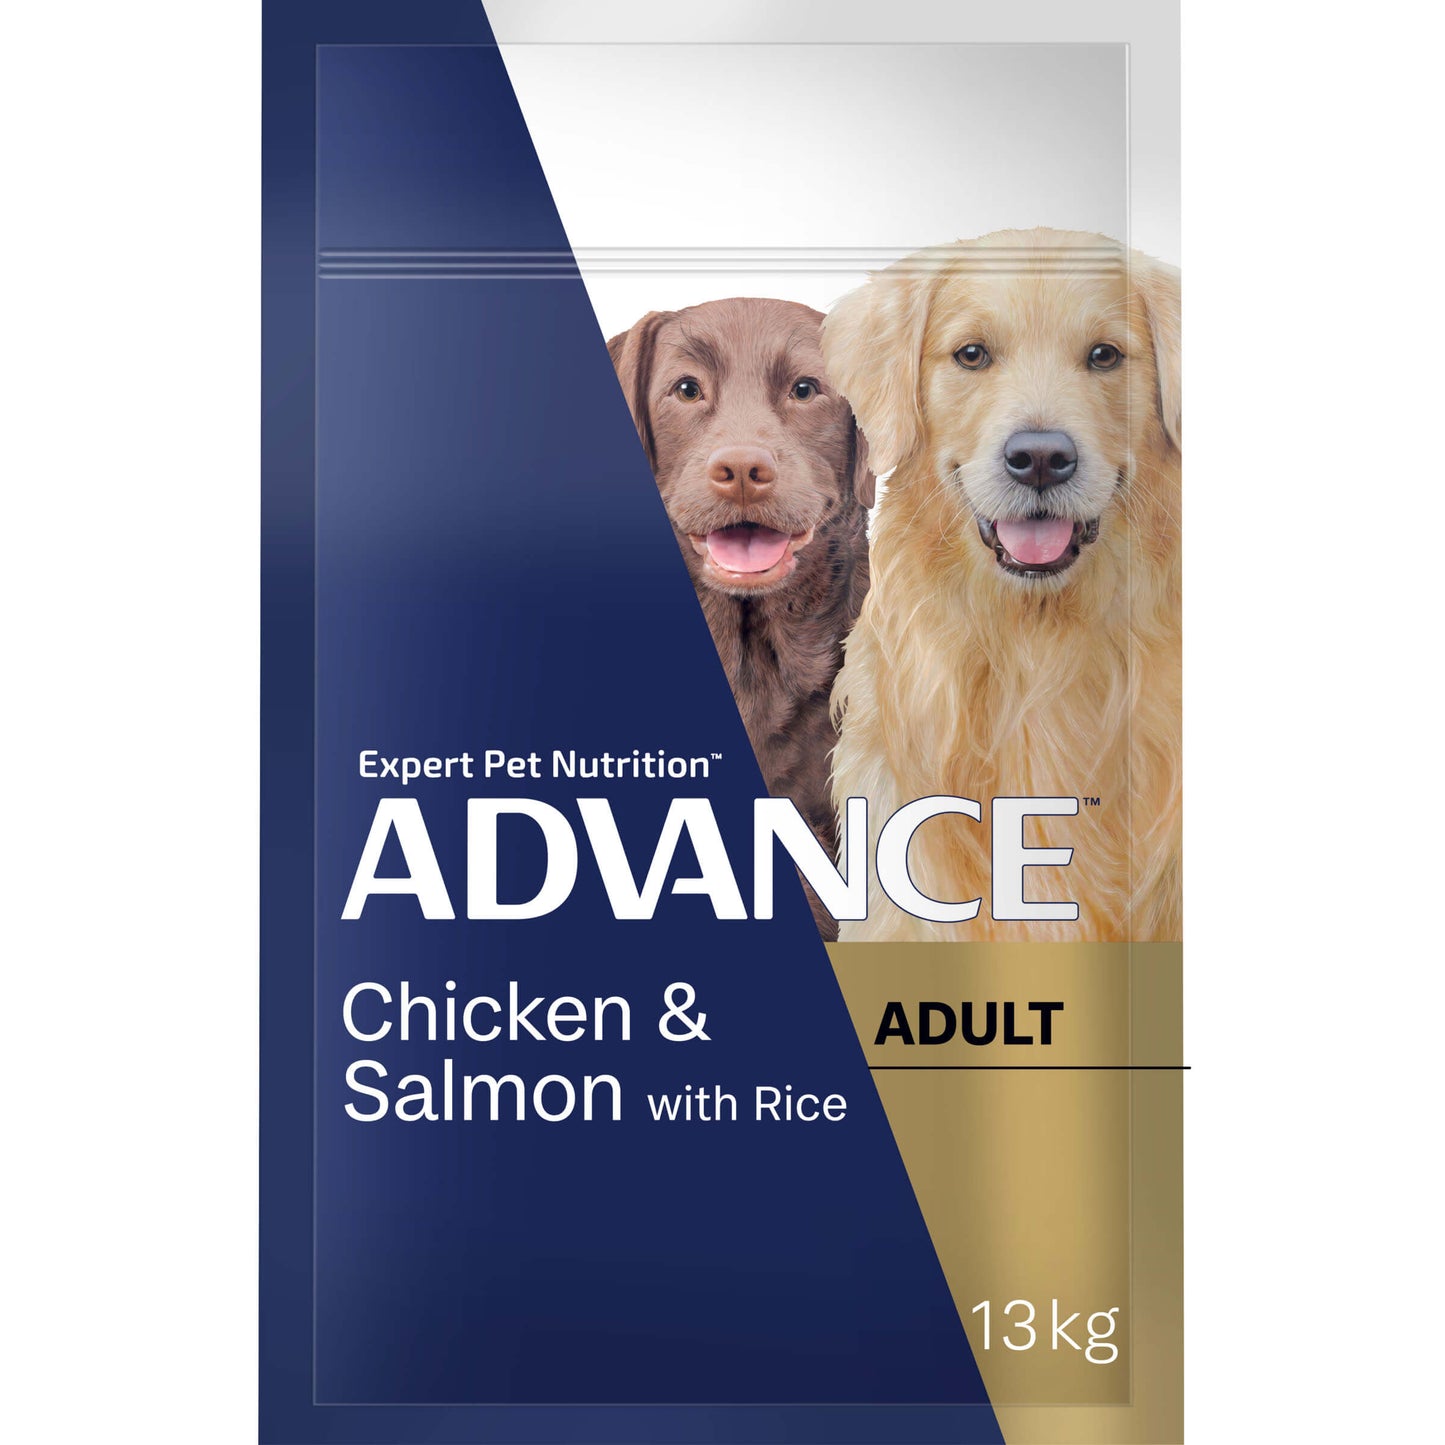 Advance Adult Retriever Dry Dog Food 13kg